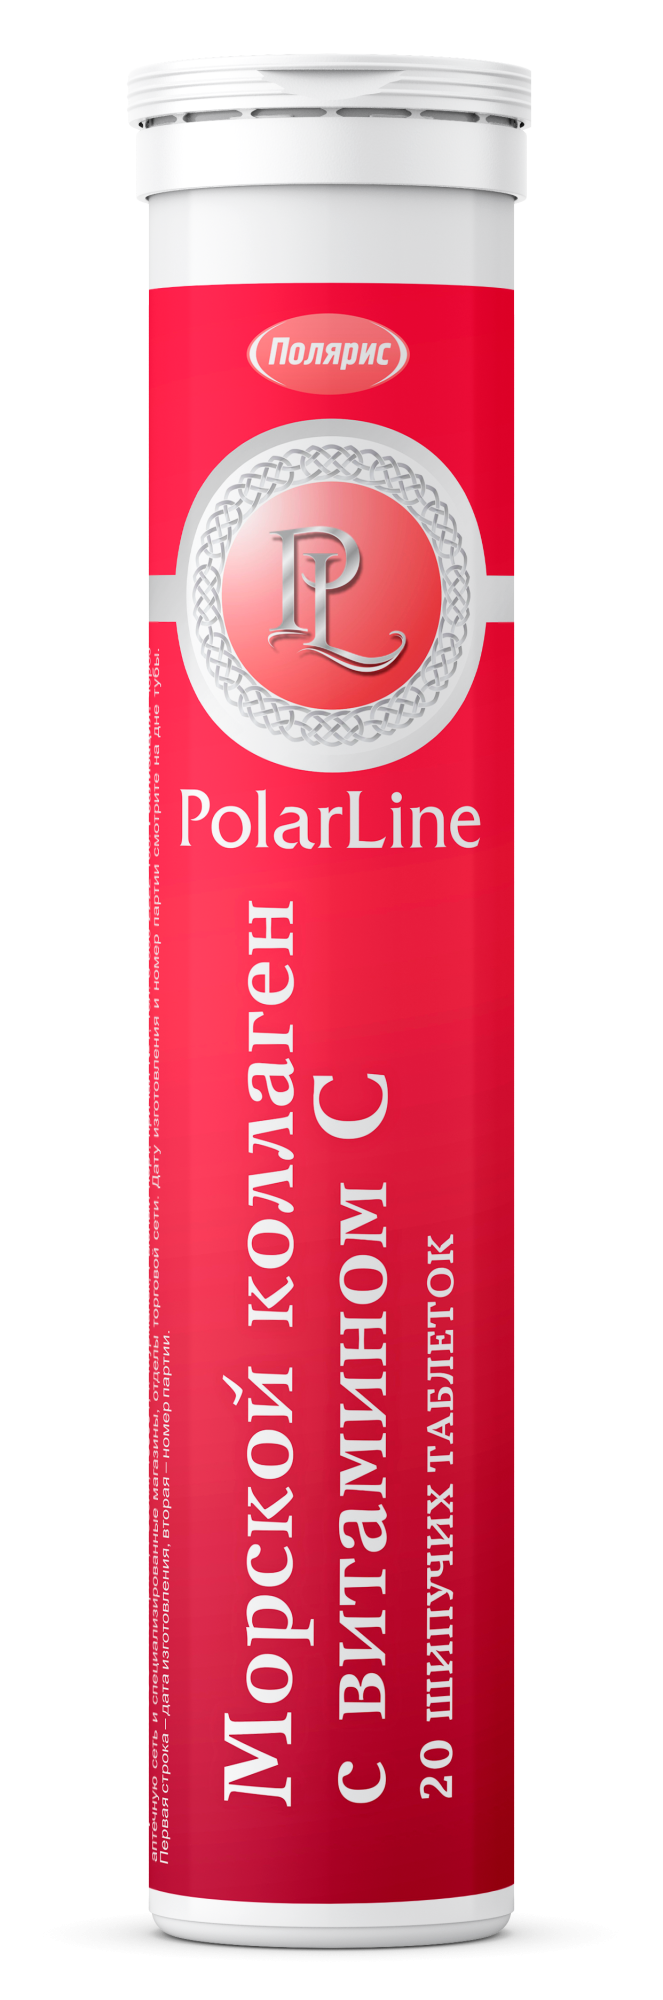      PolarLine     